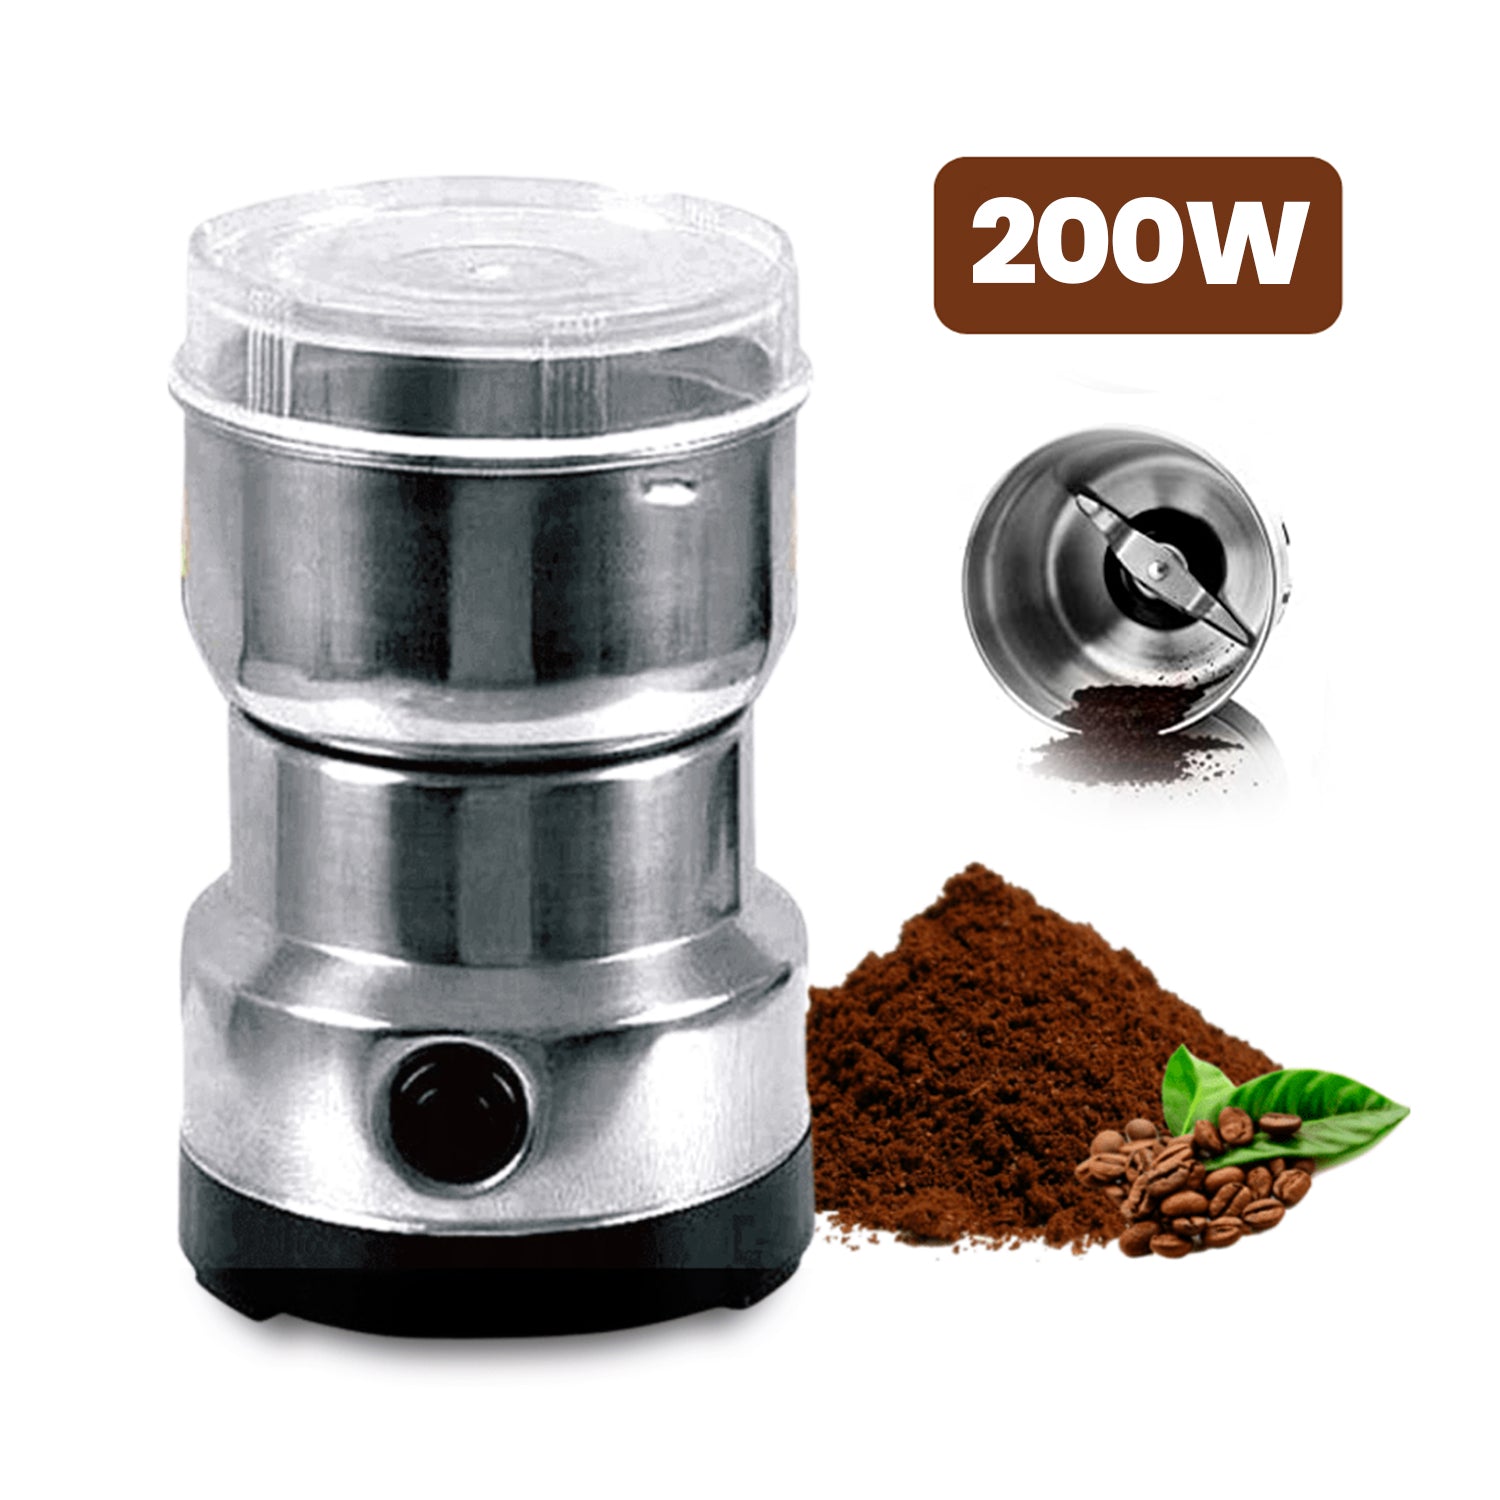 Molinillo eléctrico de café 200 W